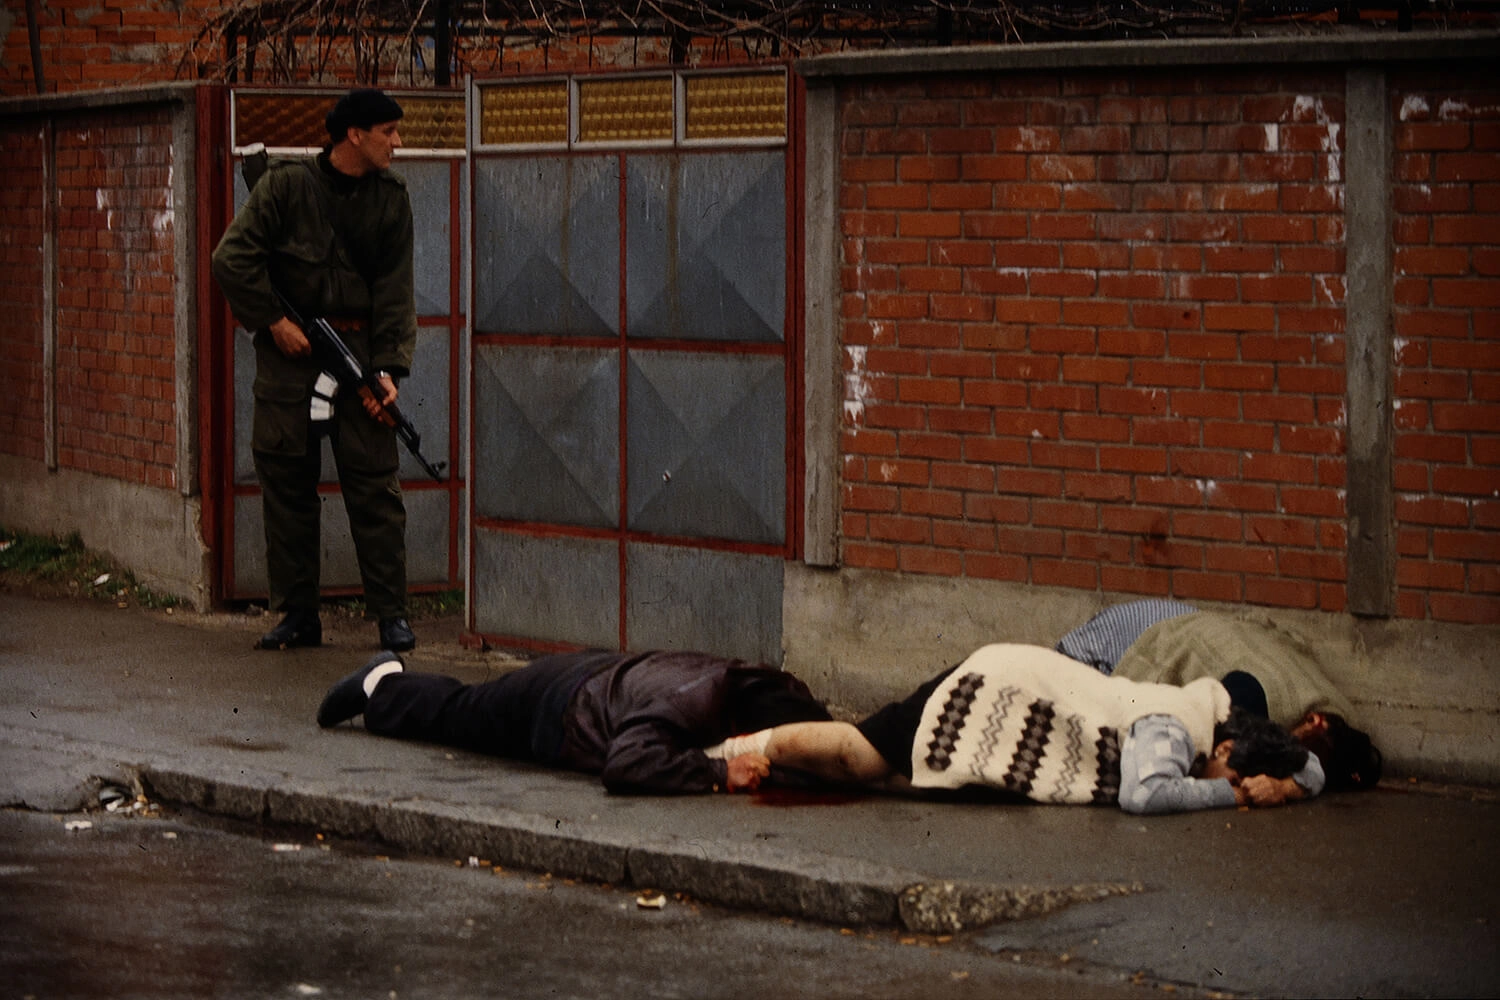 Civilians killed on the streets of Bijeljina, Bosnia, in 1992.